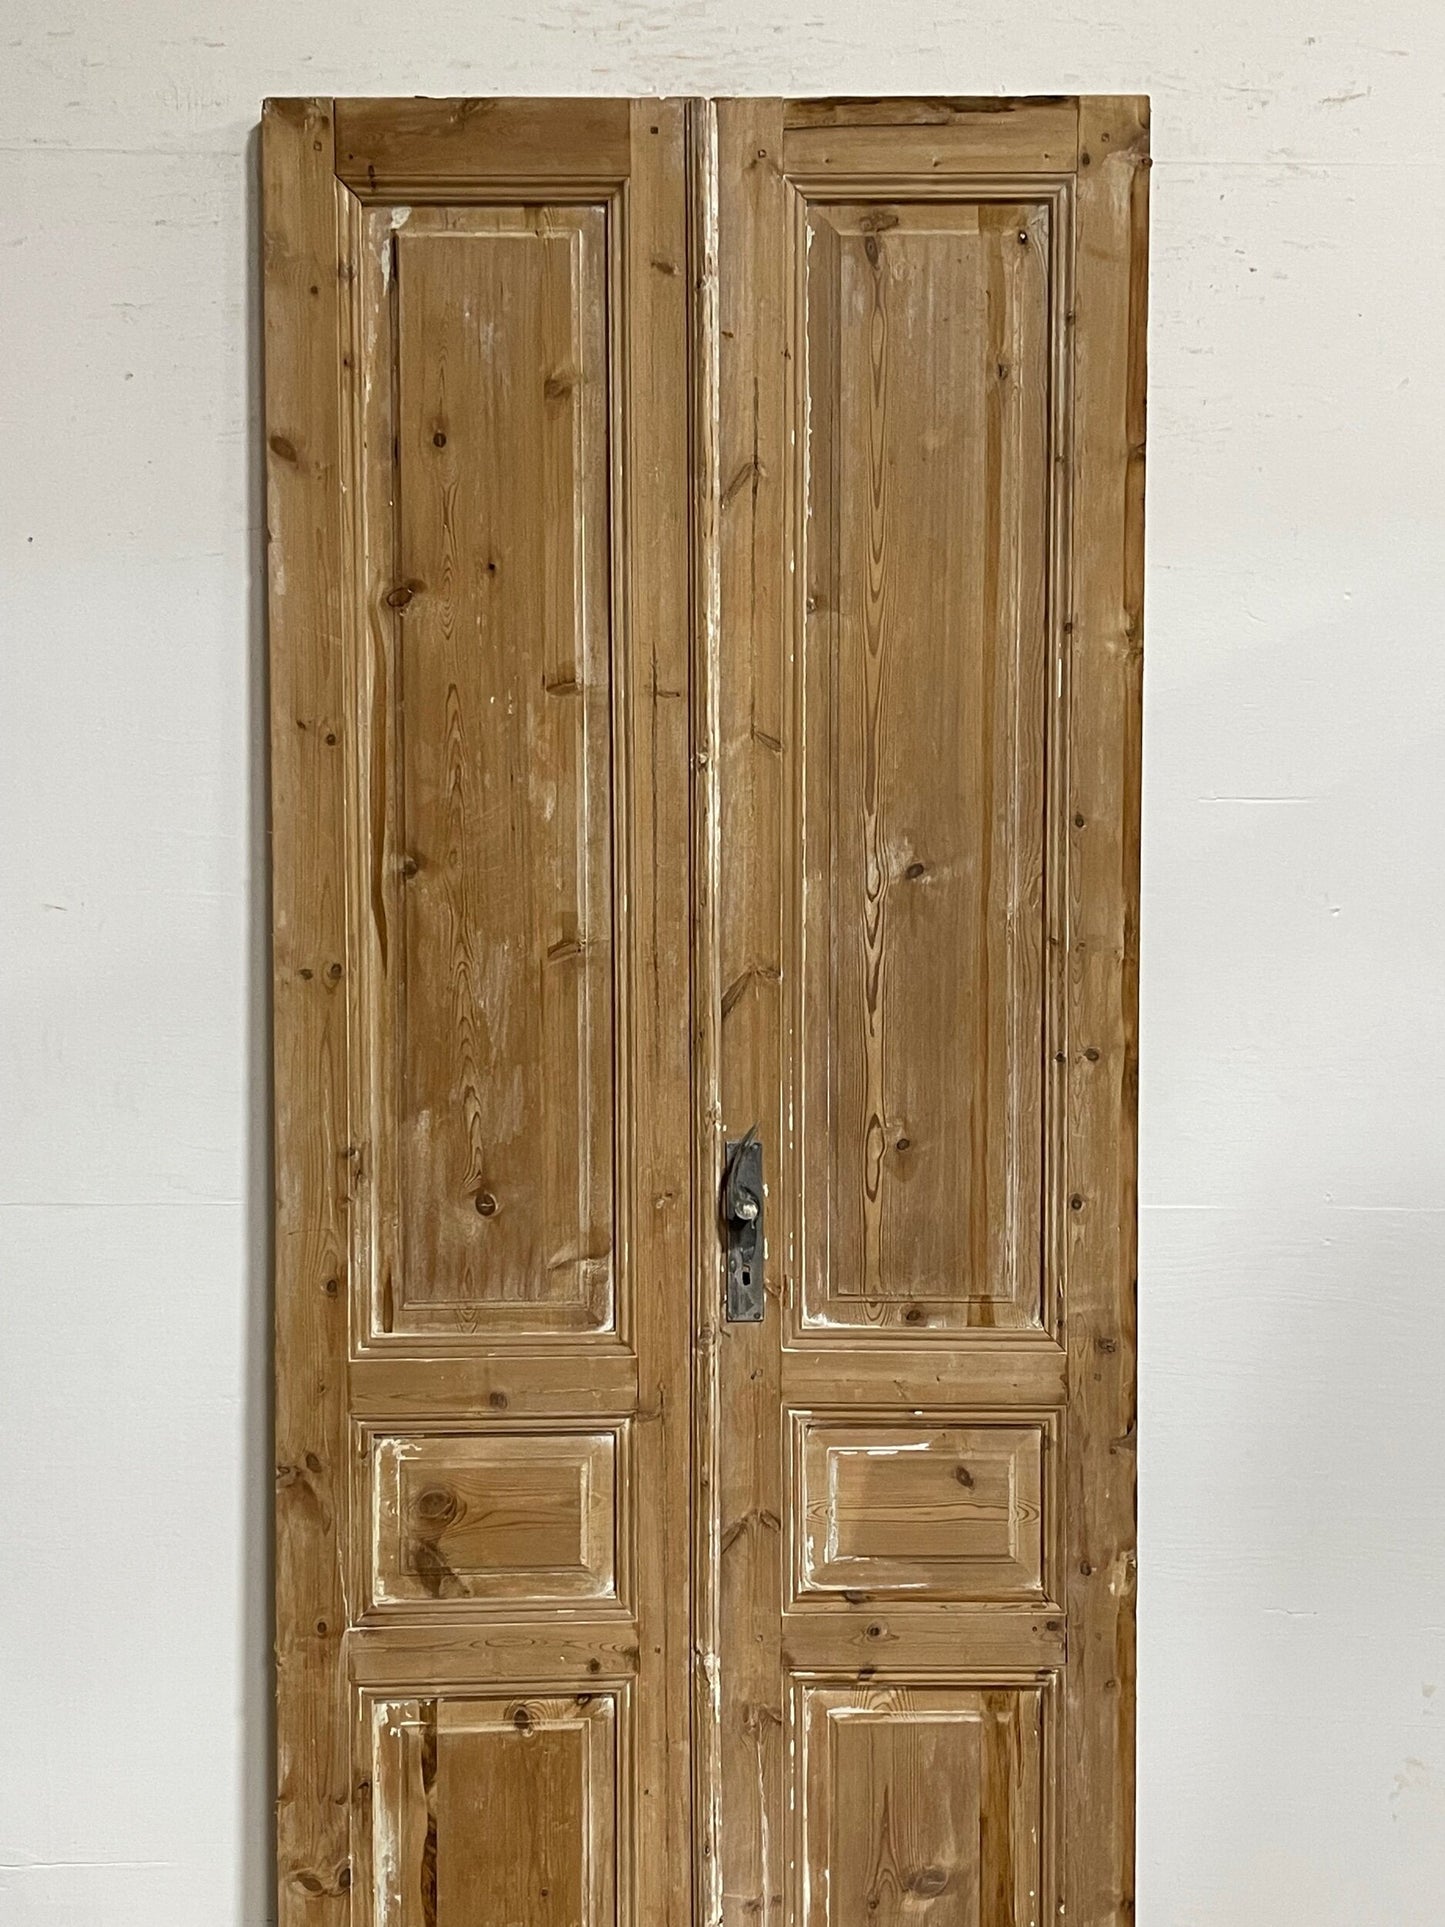 Antique French doors (98x39.25) H0133s